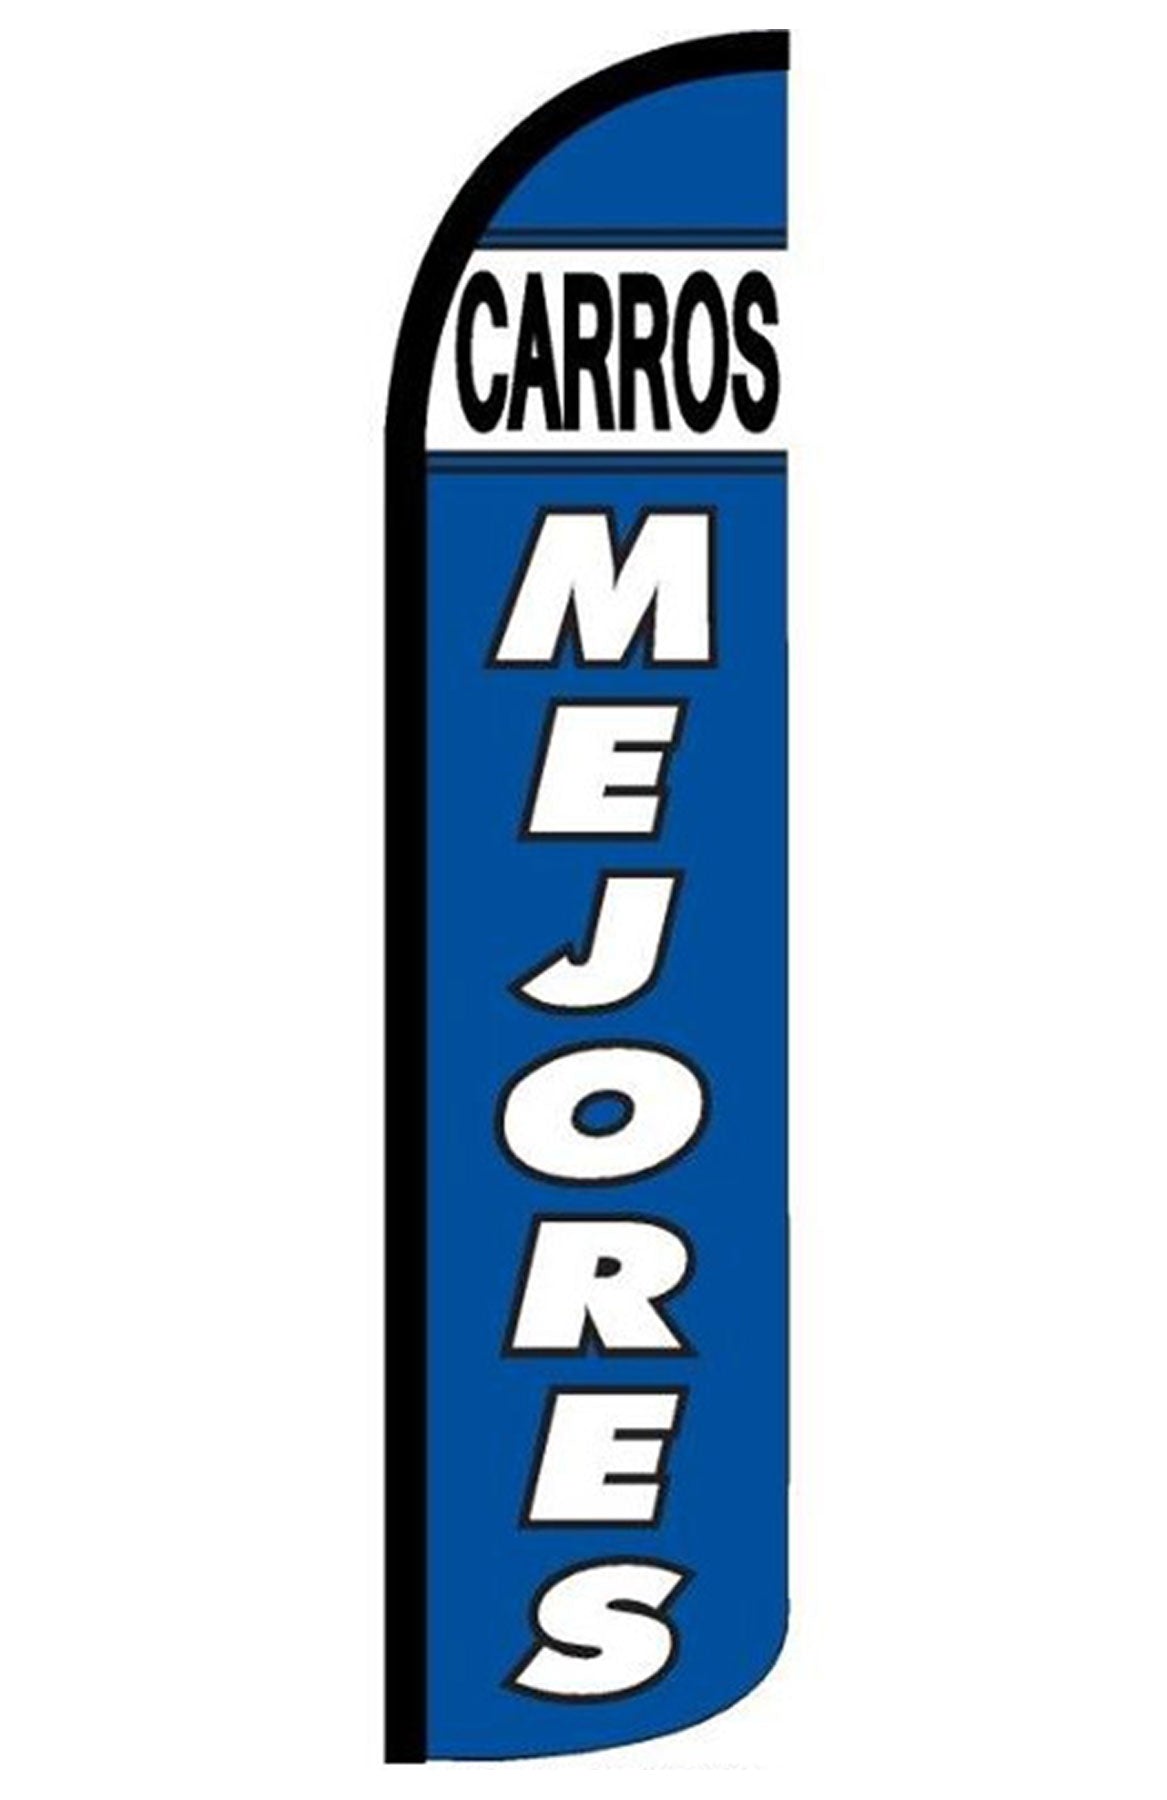 CARROS MEJORES